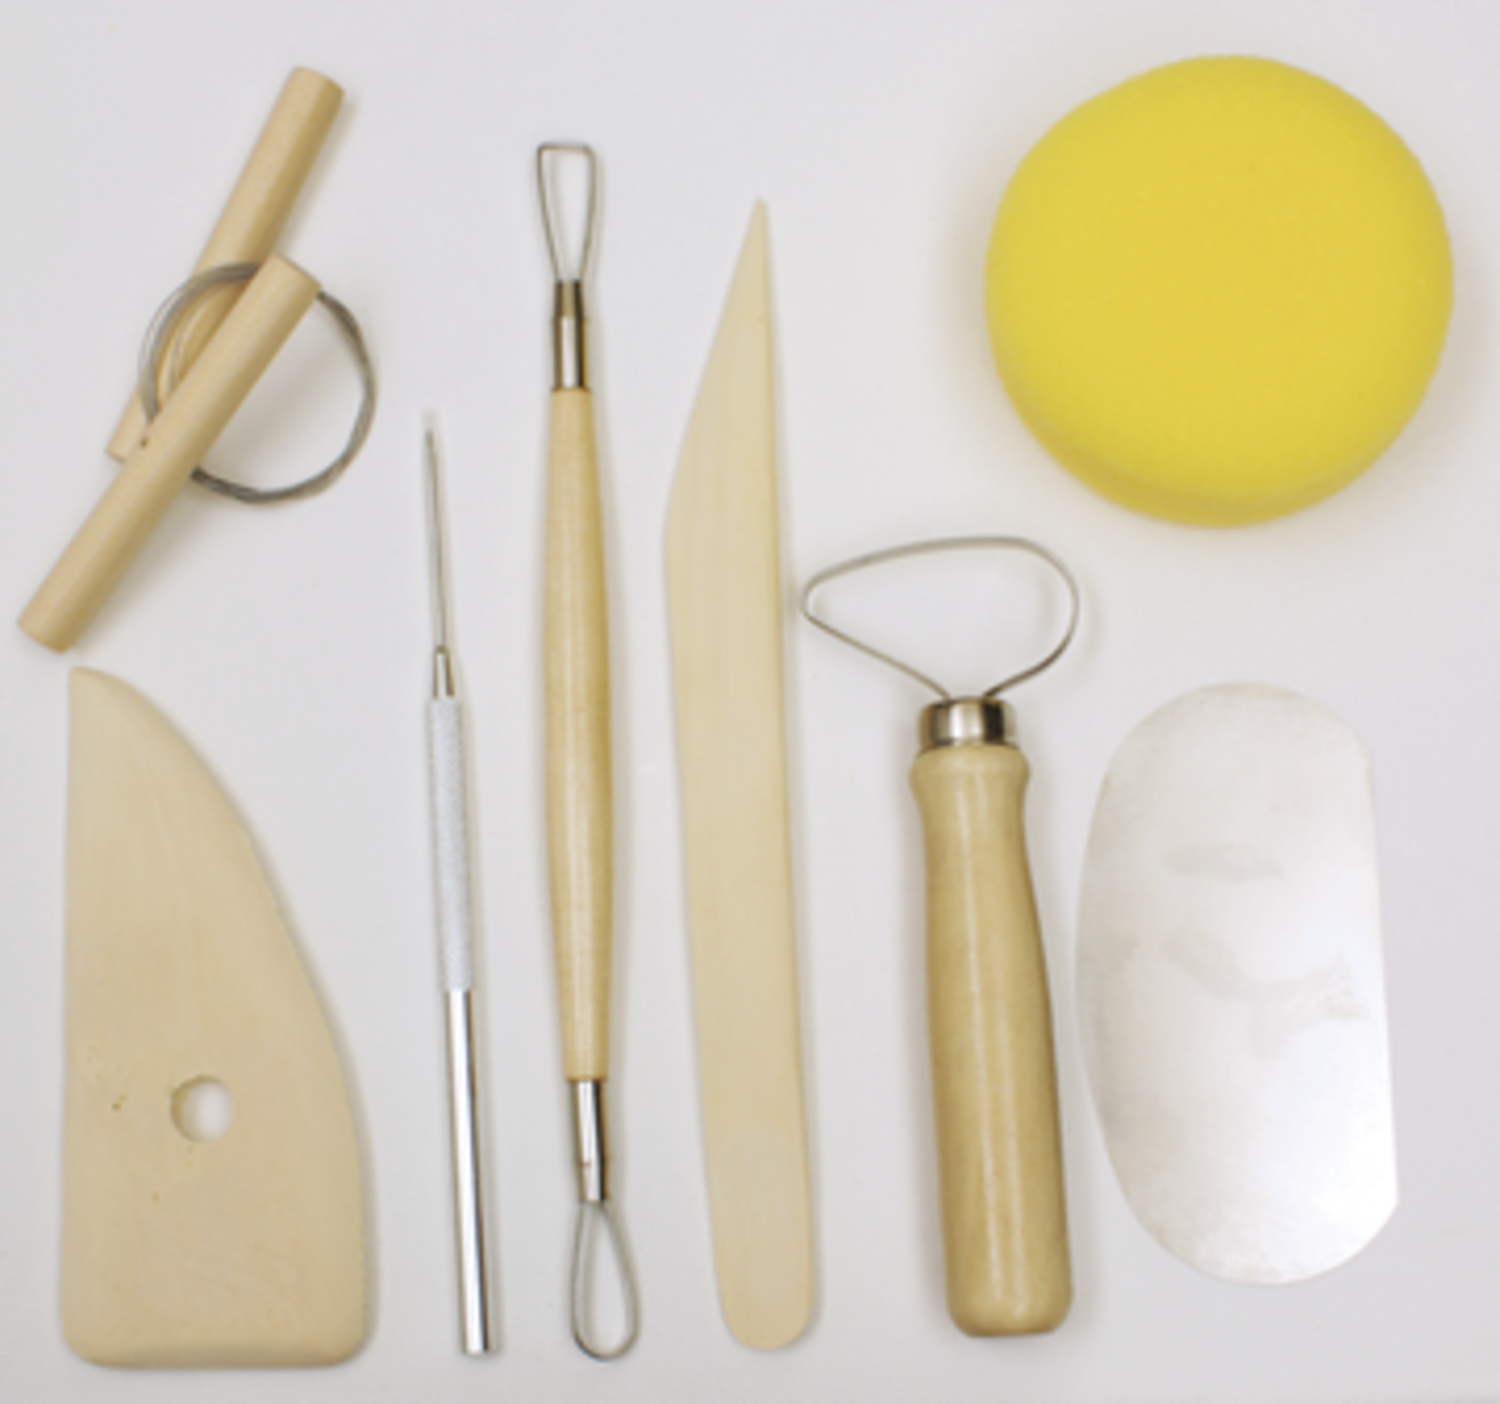 Art Alternatives - Pottery Tool Kit